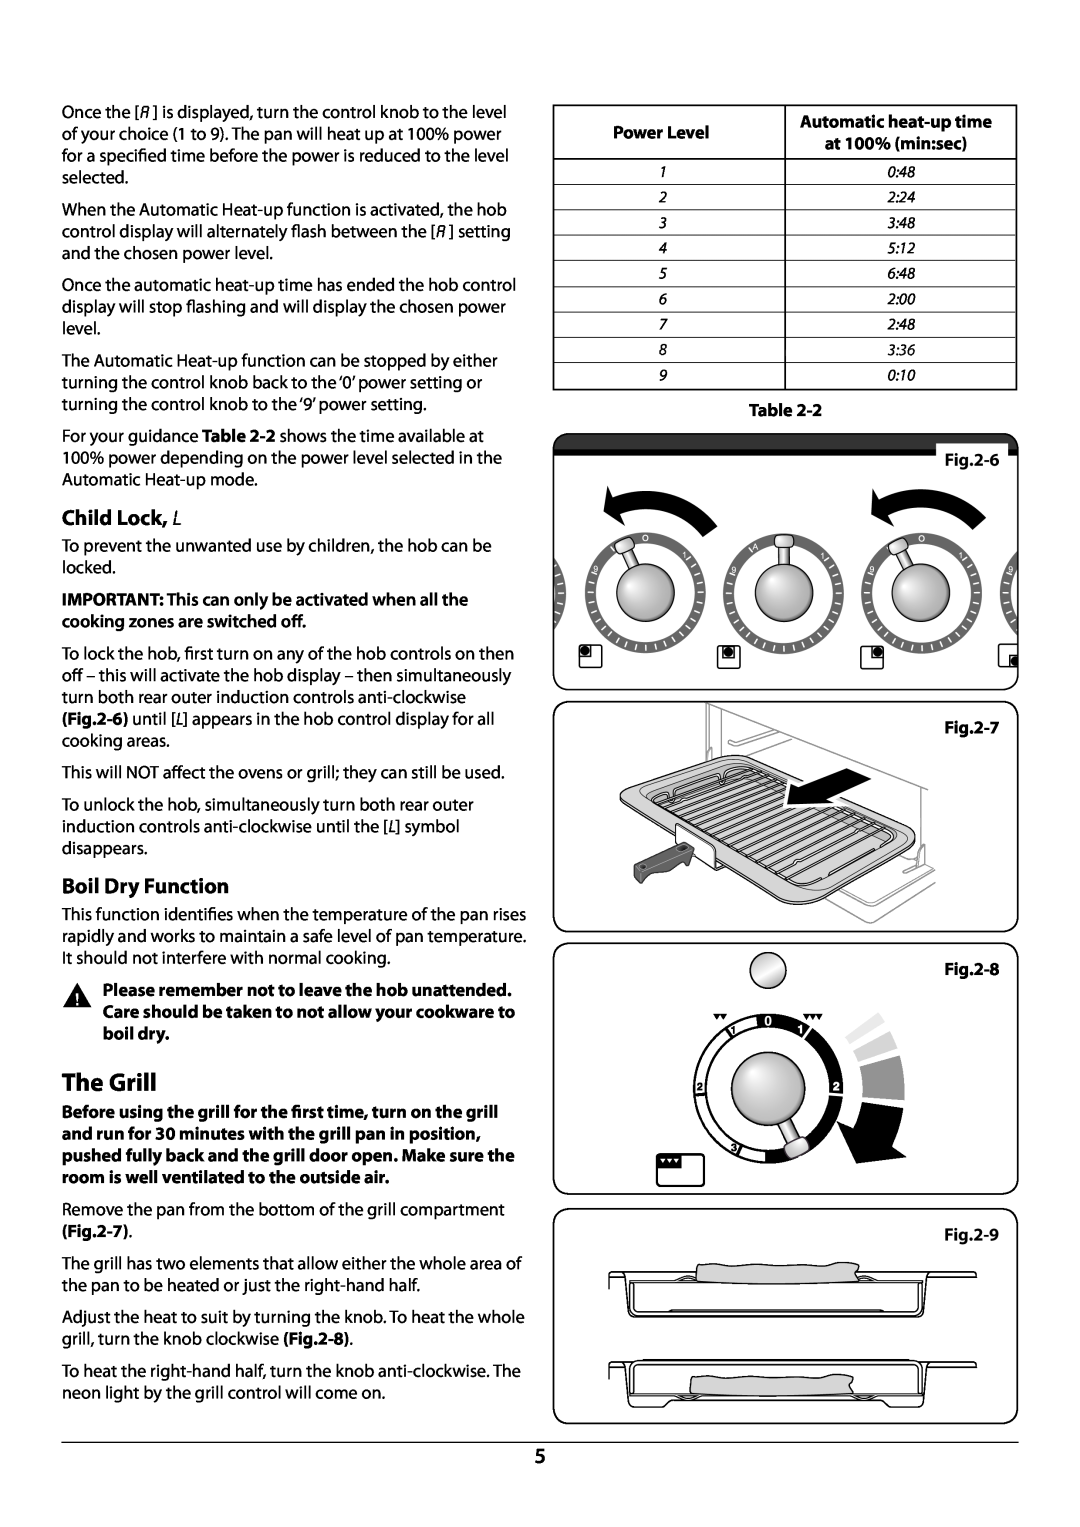 Rangemaster U109976 - 02 manual The Grill, Child Lock, L, Boil Dry Function, ArtNo.210-0001 Classic grill control, 6 -7, 8 